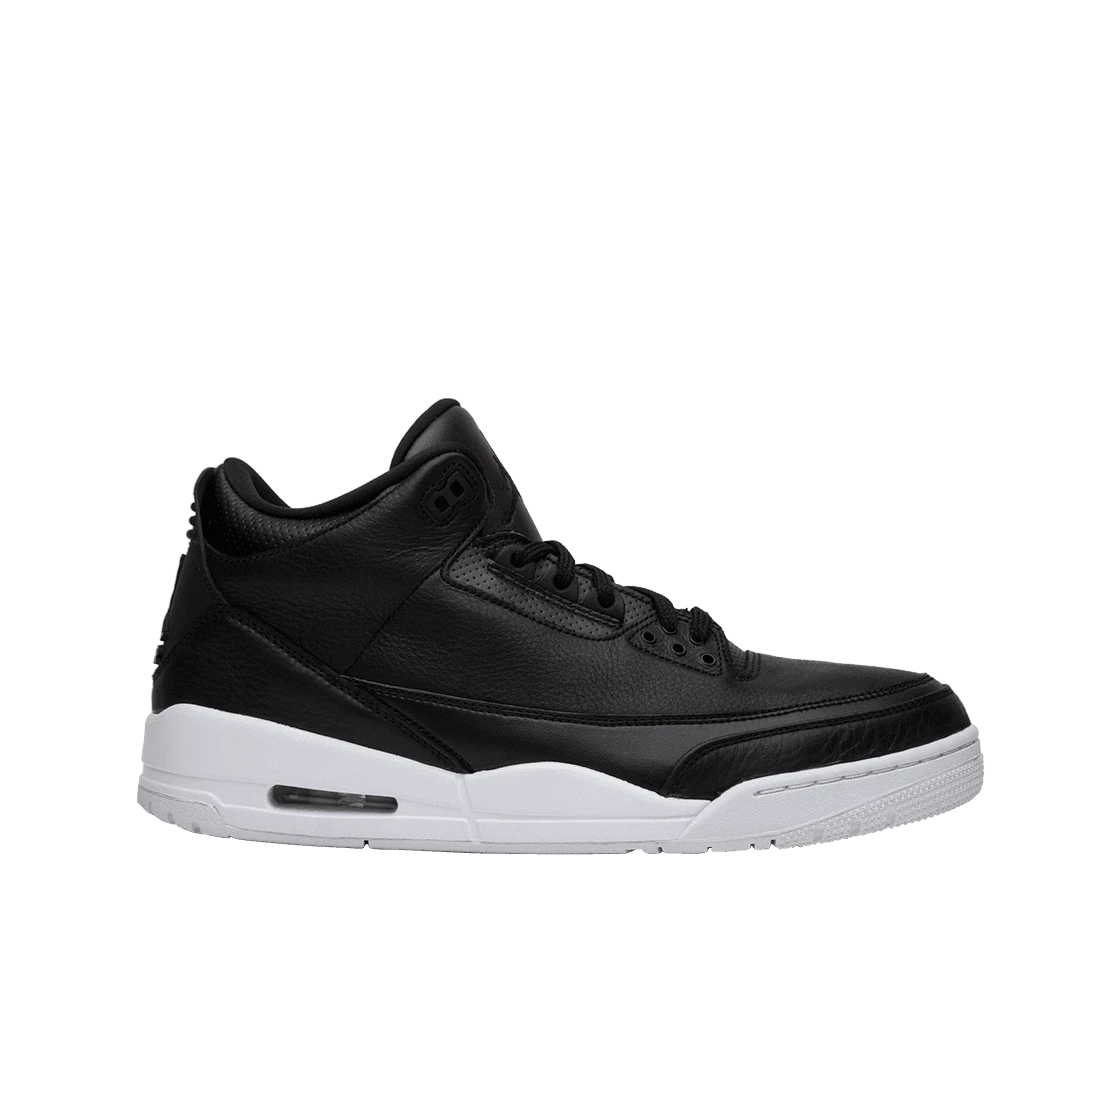 SASOM | shoes Jordan 3 Retro Cyber Monday 2016 Check the latest price now!